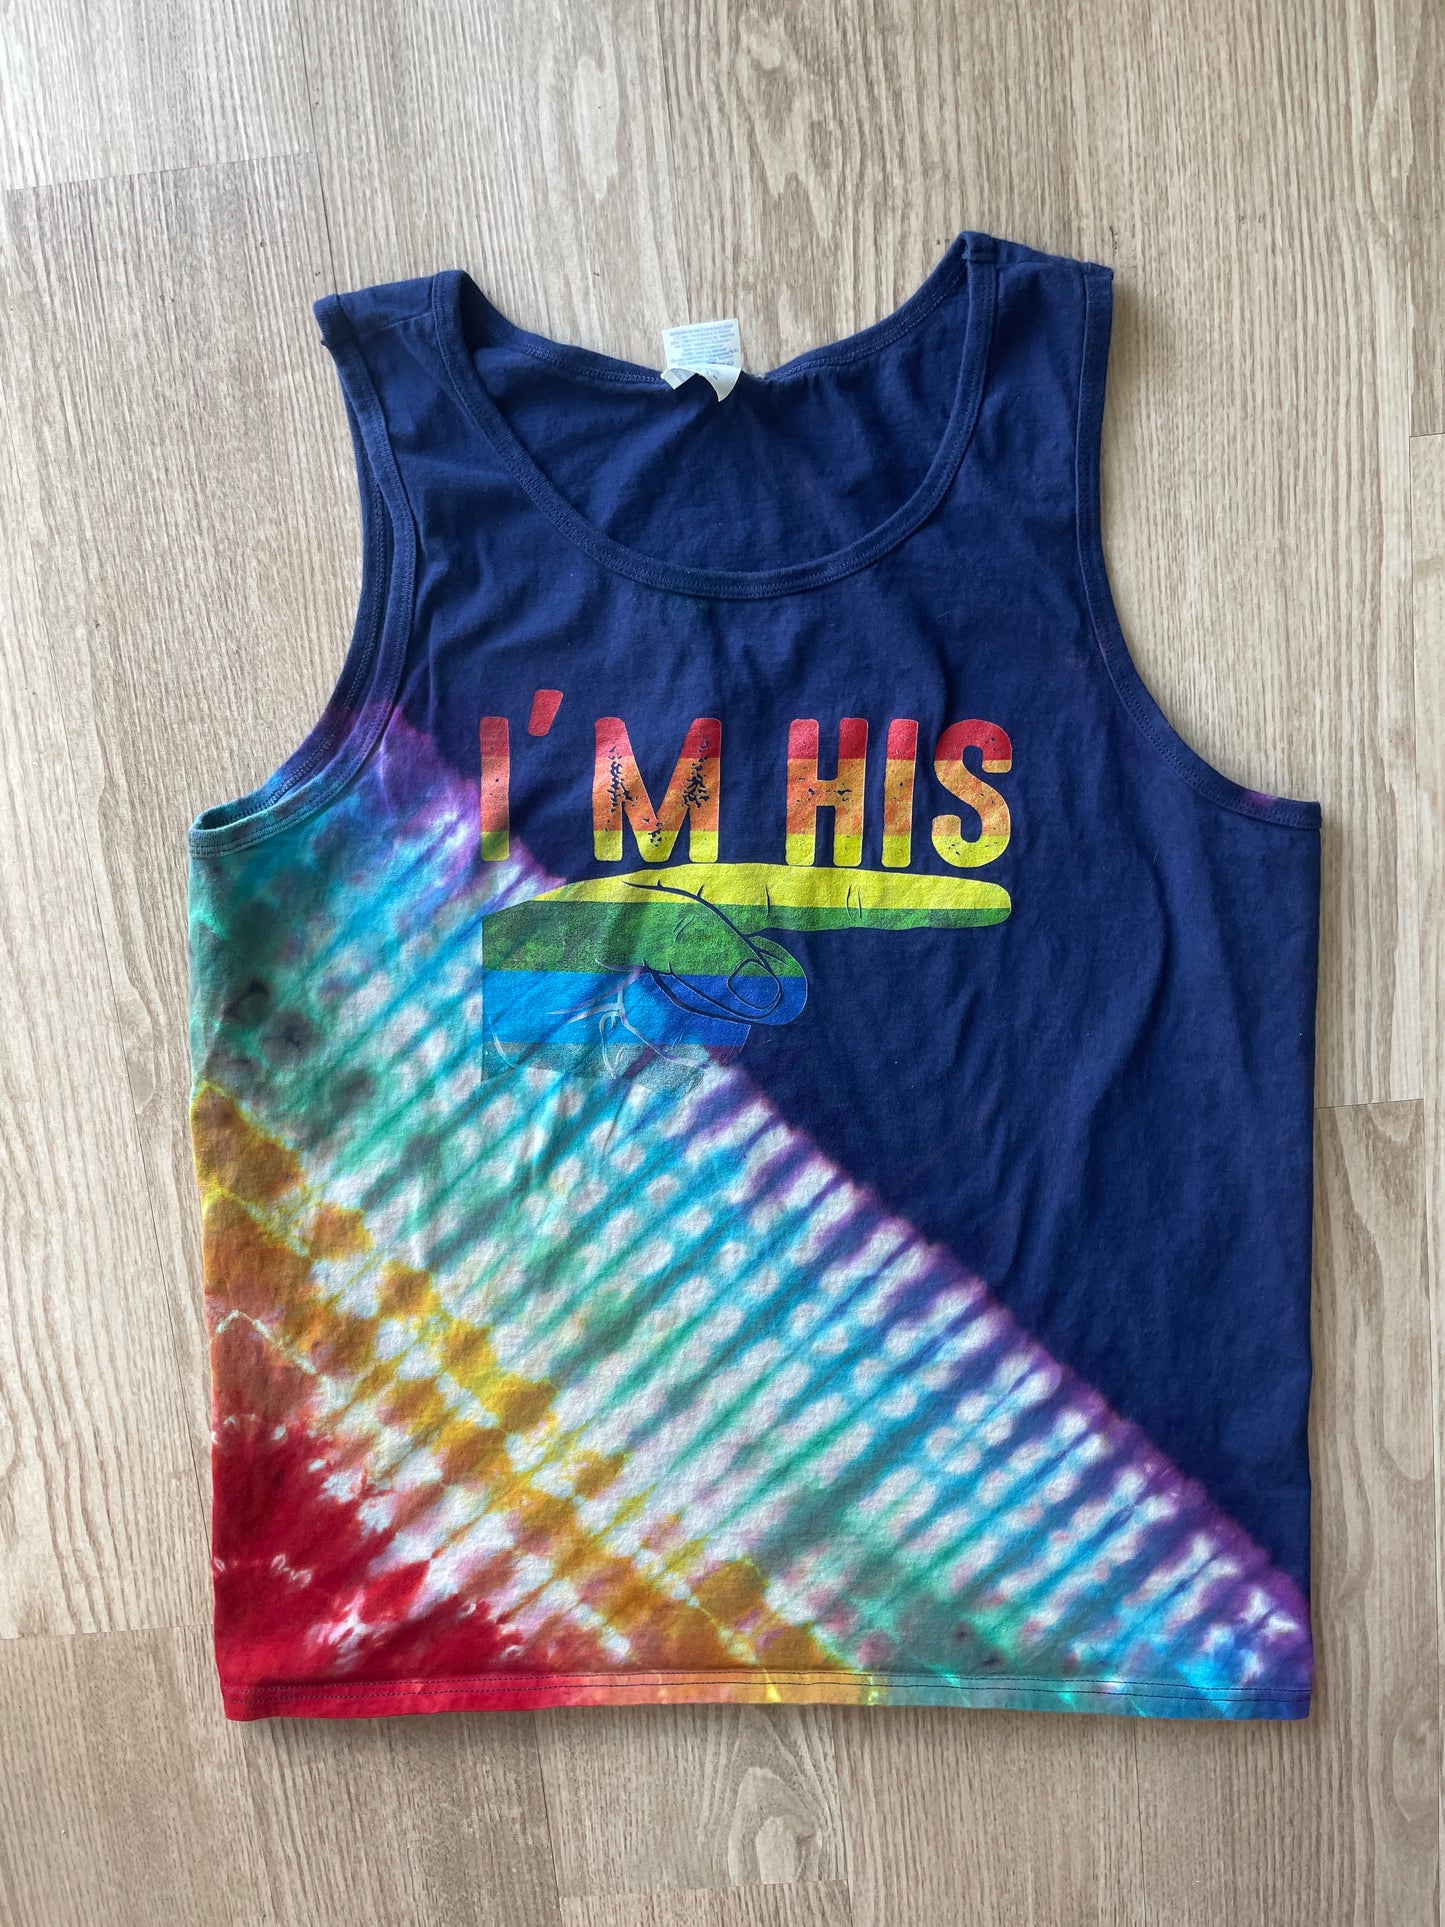 MEDIUM Men’s I'm His PRIDE Handmade Tie Dye Tank Top | One-Of-a-Kind Rainbow Short Sleeve